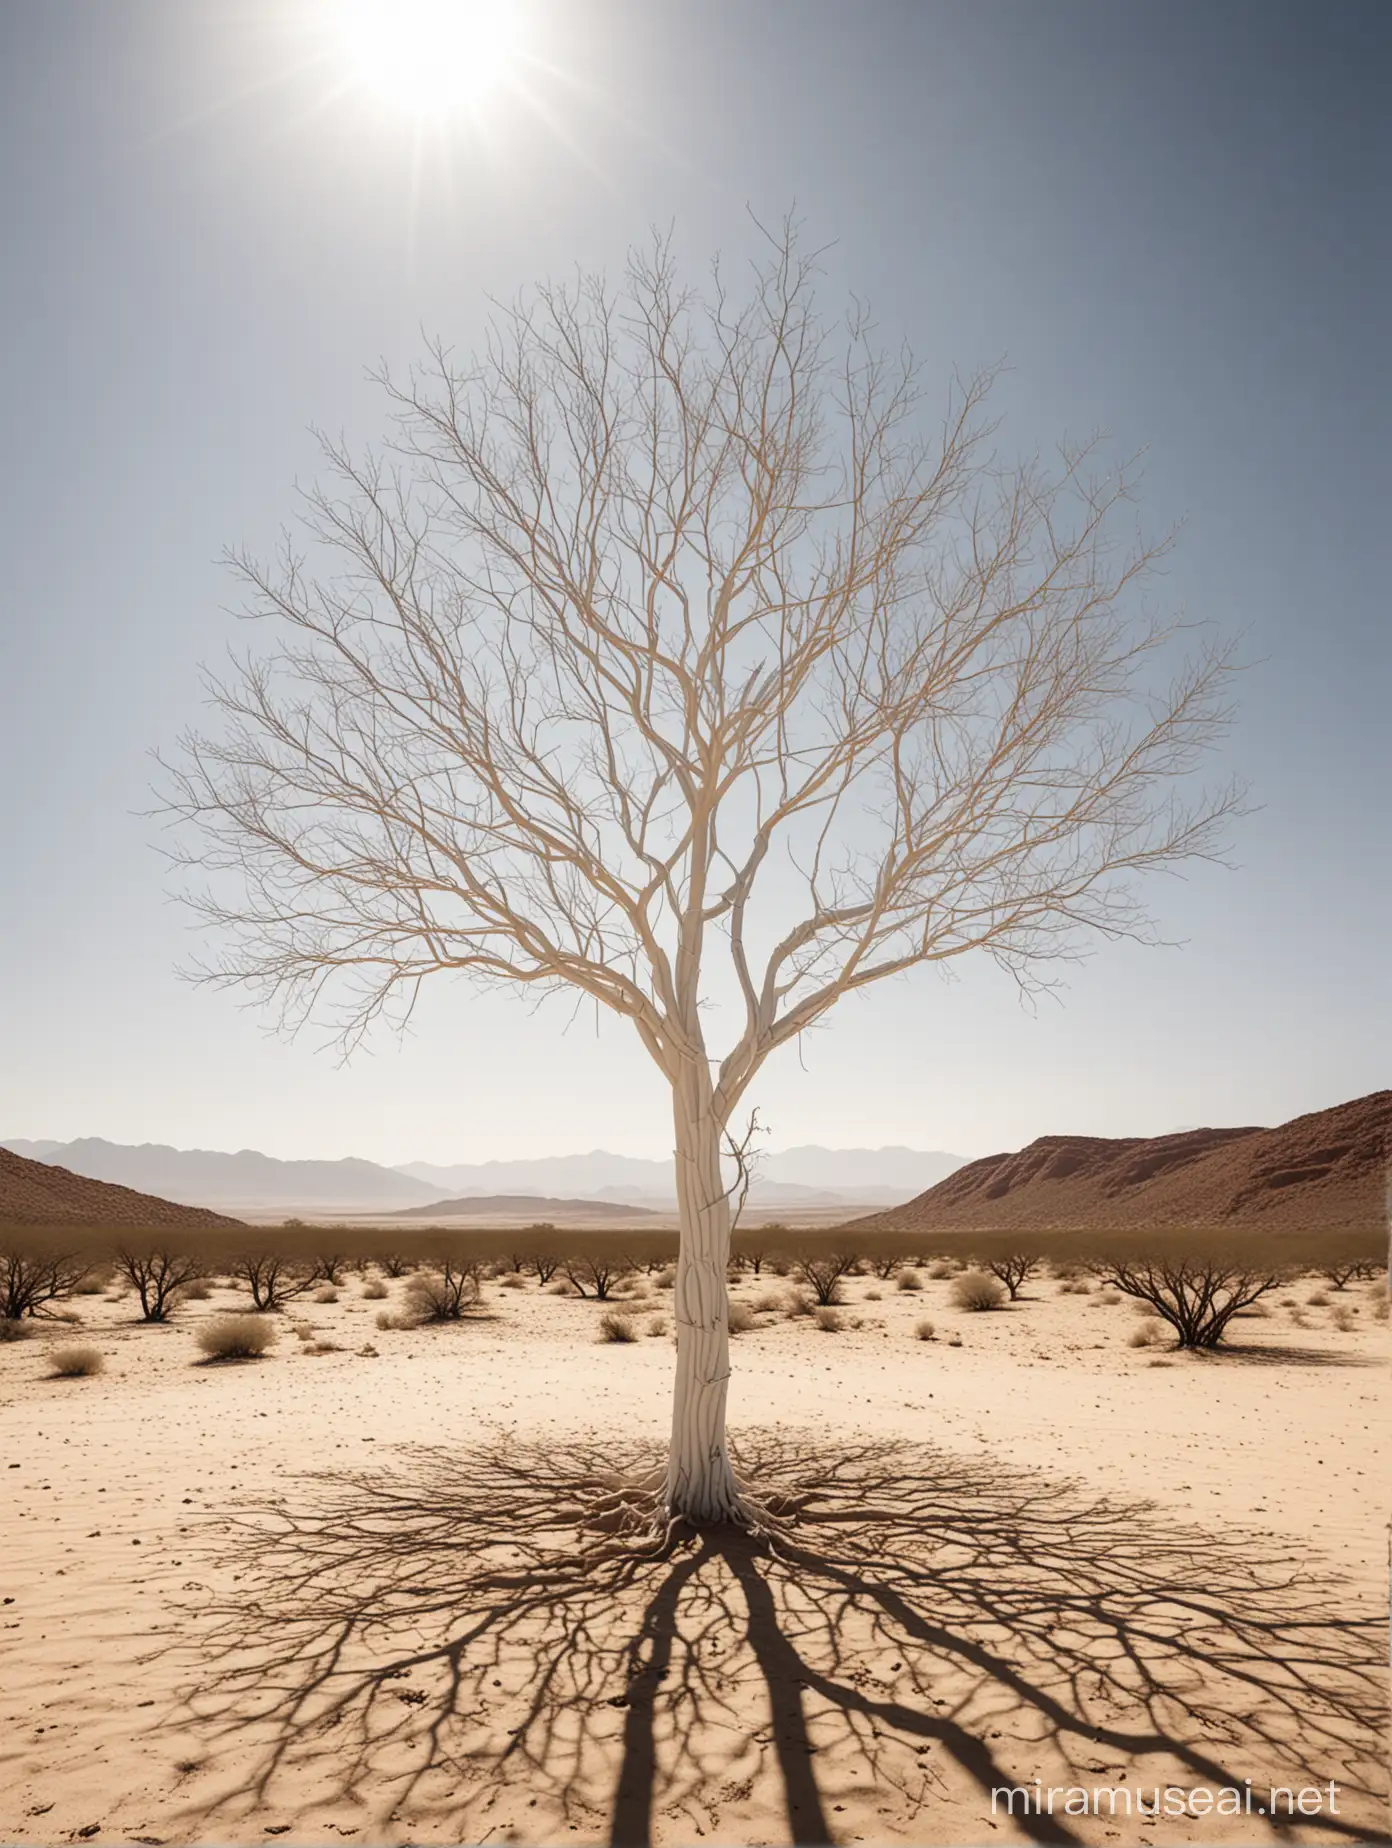 Desert Solitude Wireframe Scaffolding Amidst DroughtStricken Tree